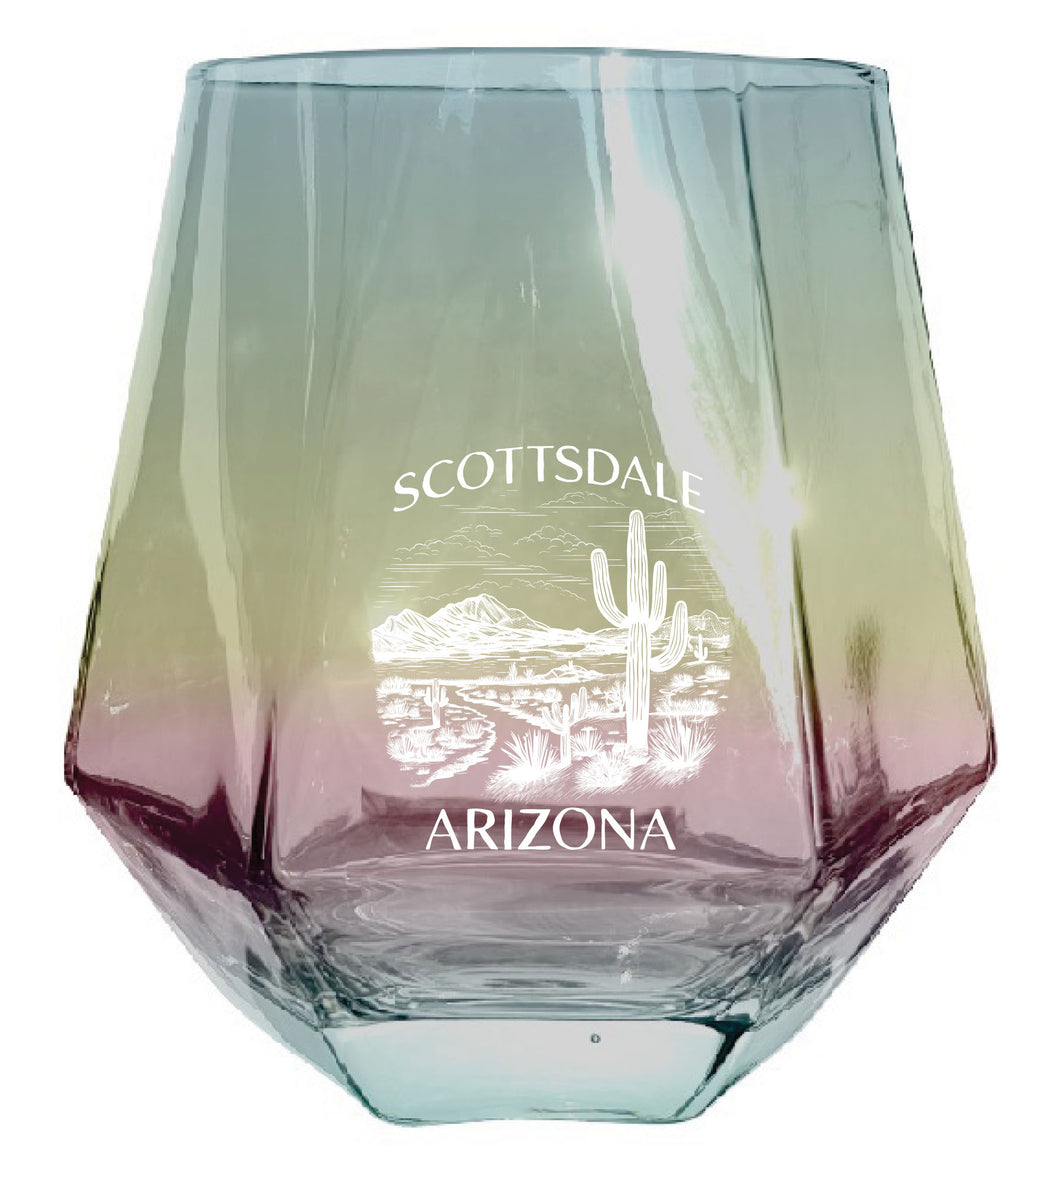 Scottsdale Arizona Souvenir Wine Glass EngravedDiamond 15 oz clear Iridescent